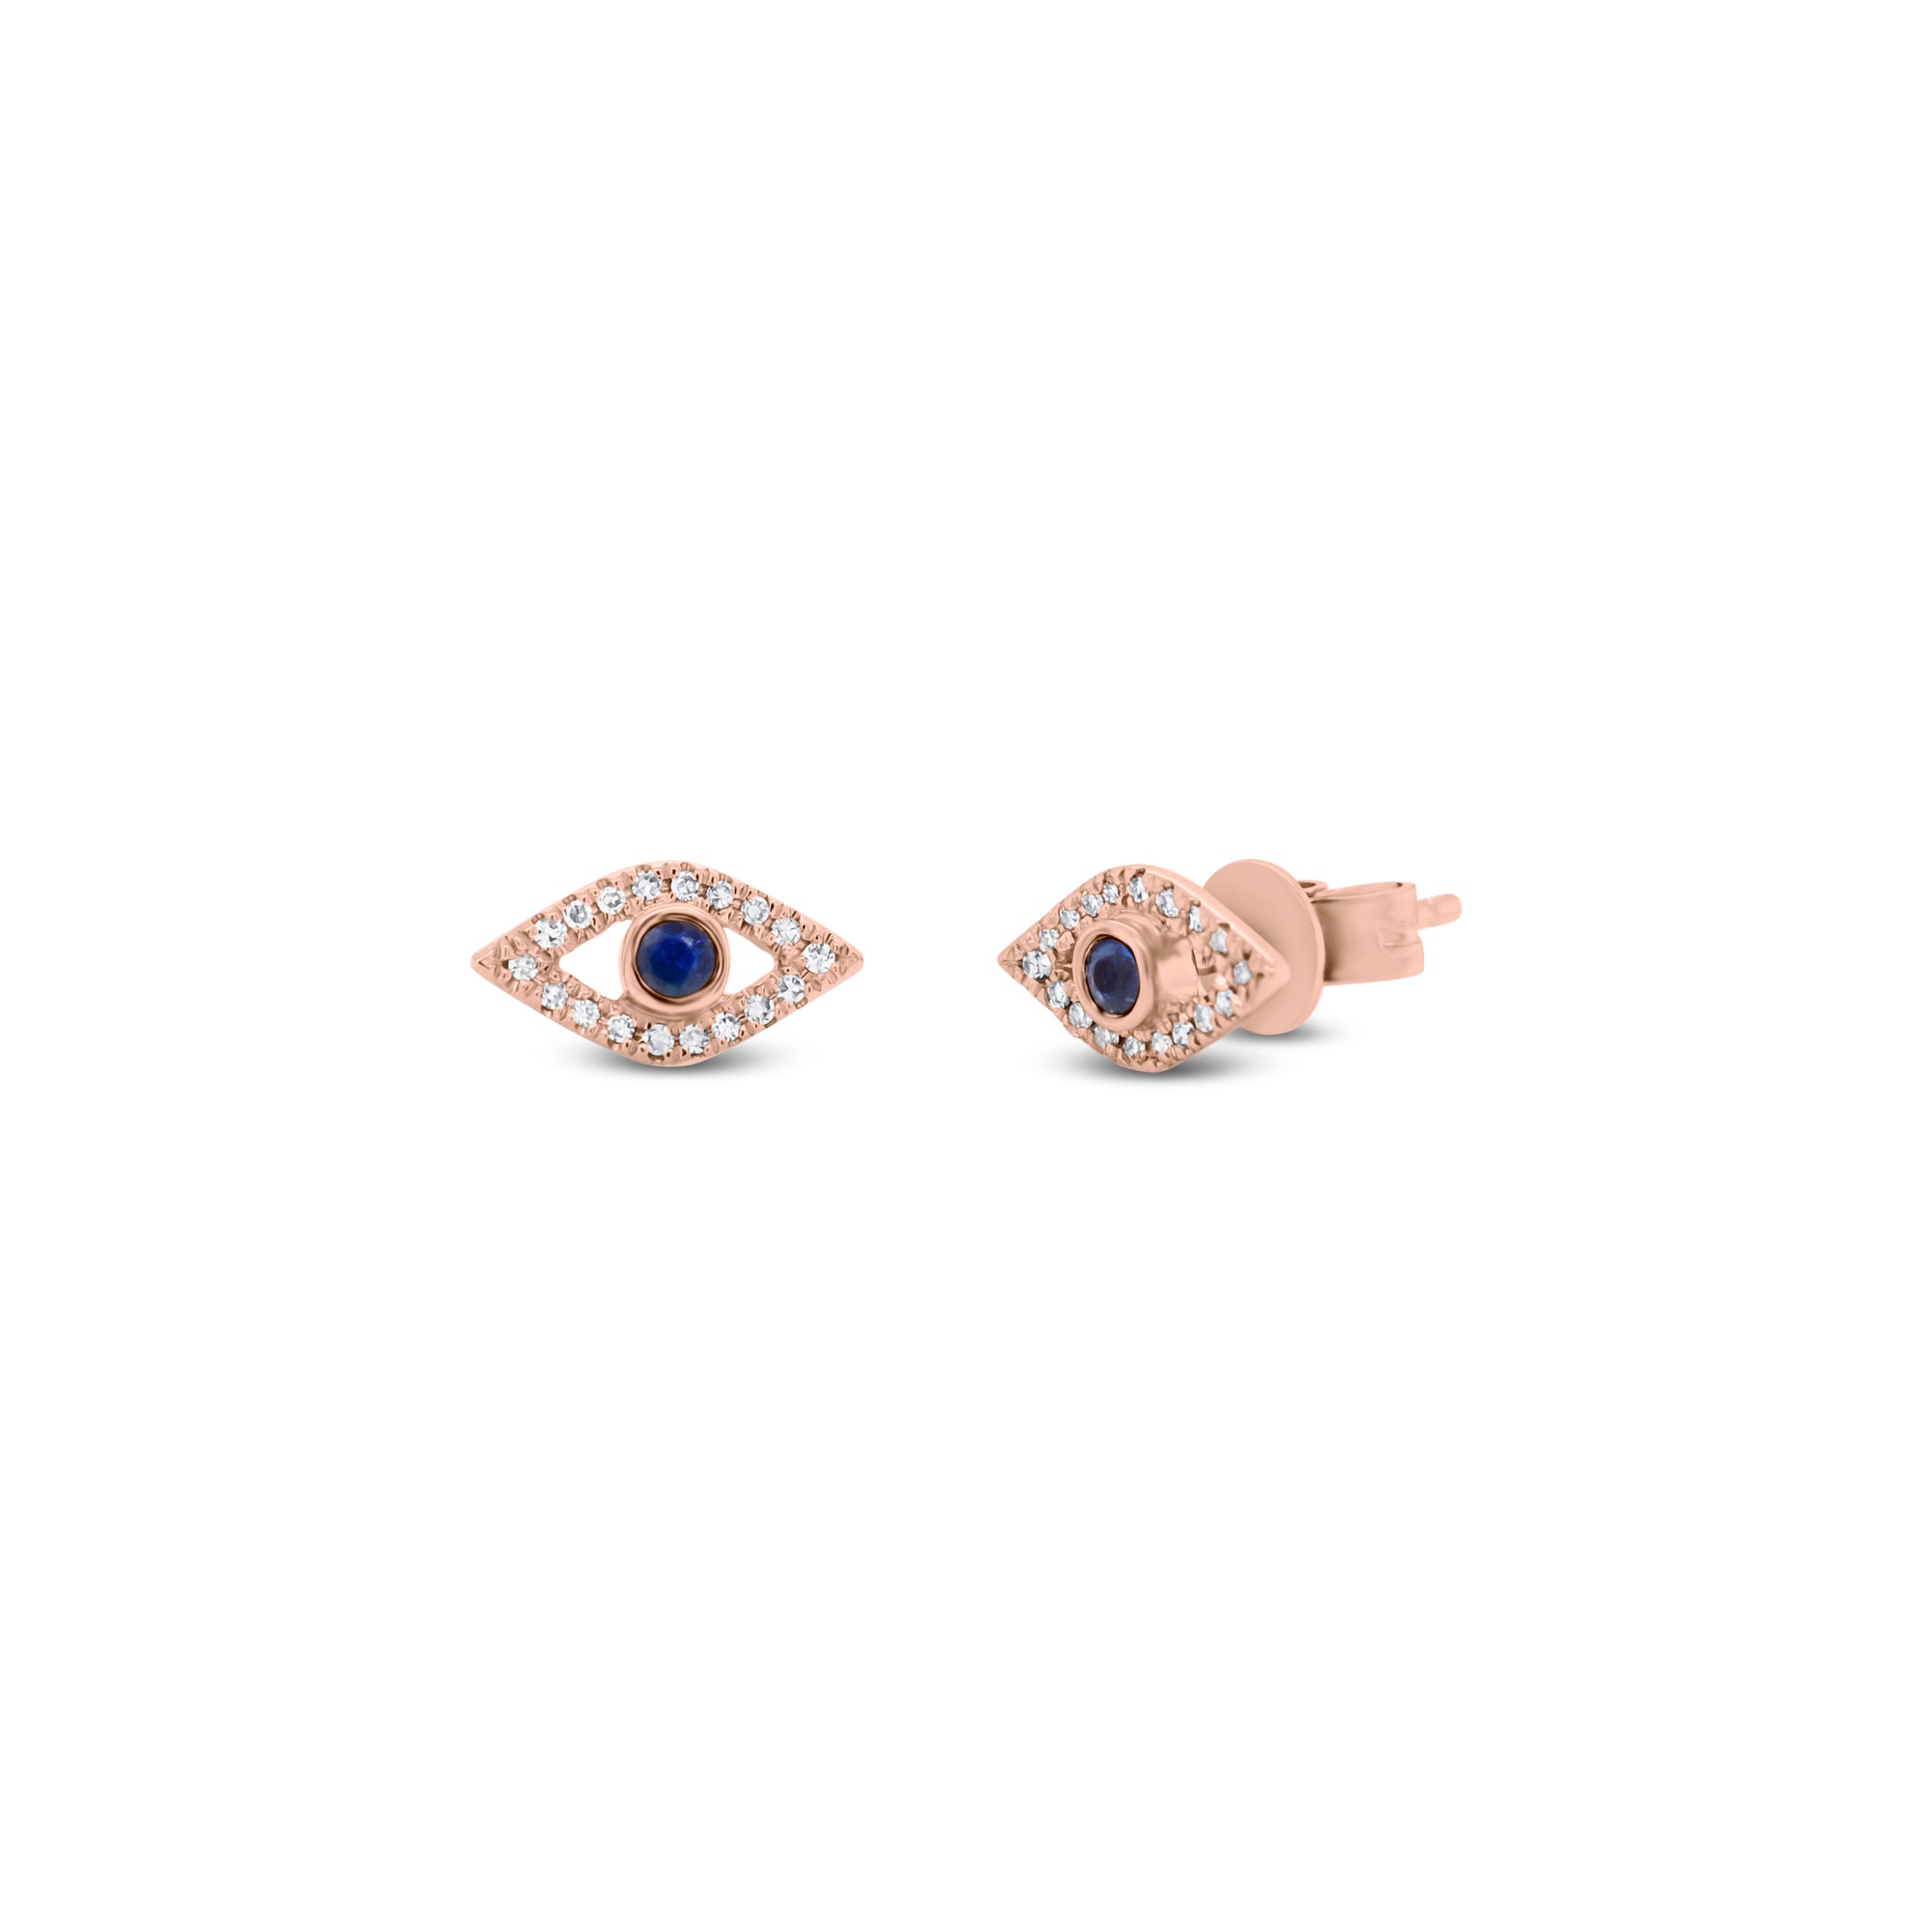 Diamond & Sapphire Evil Eye Stud Earrings - 14K yellow gold weighing 1.20 grams - 36 round diamonds totaling 0.07 carats - 2 sapphires totaling 0.10 carats.